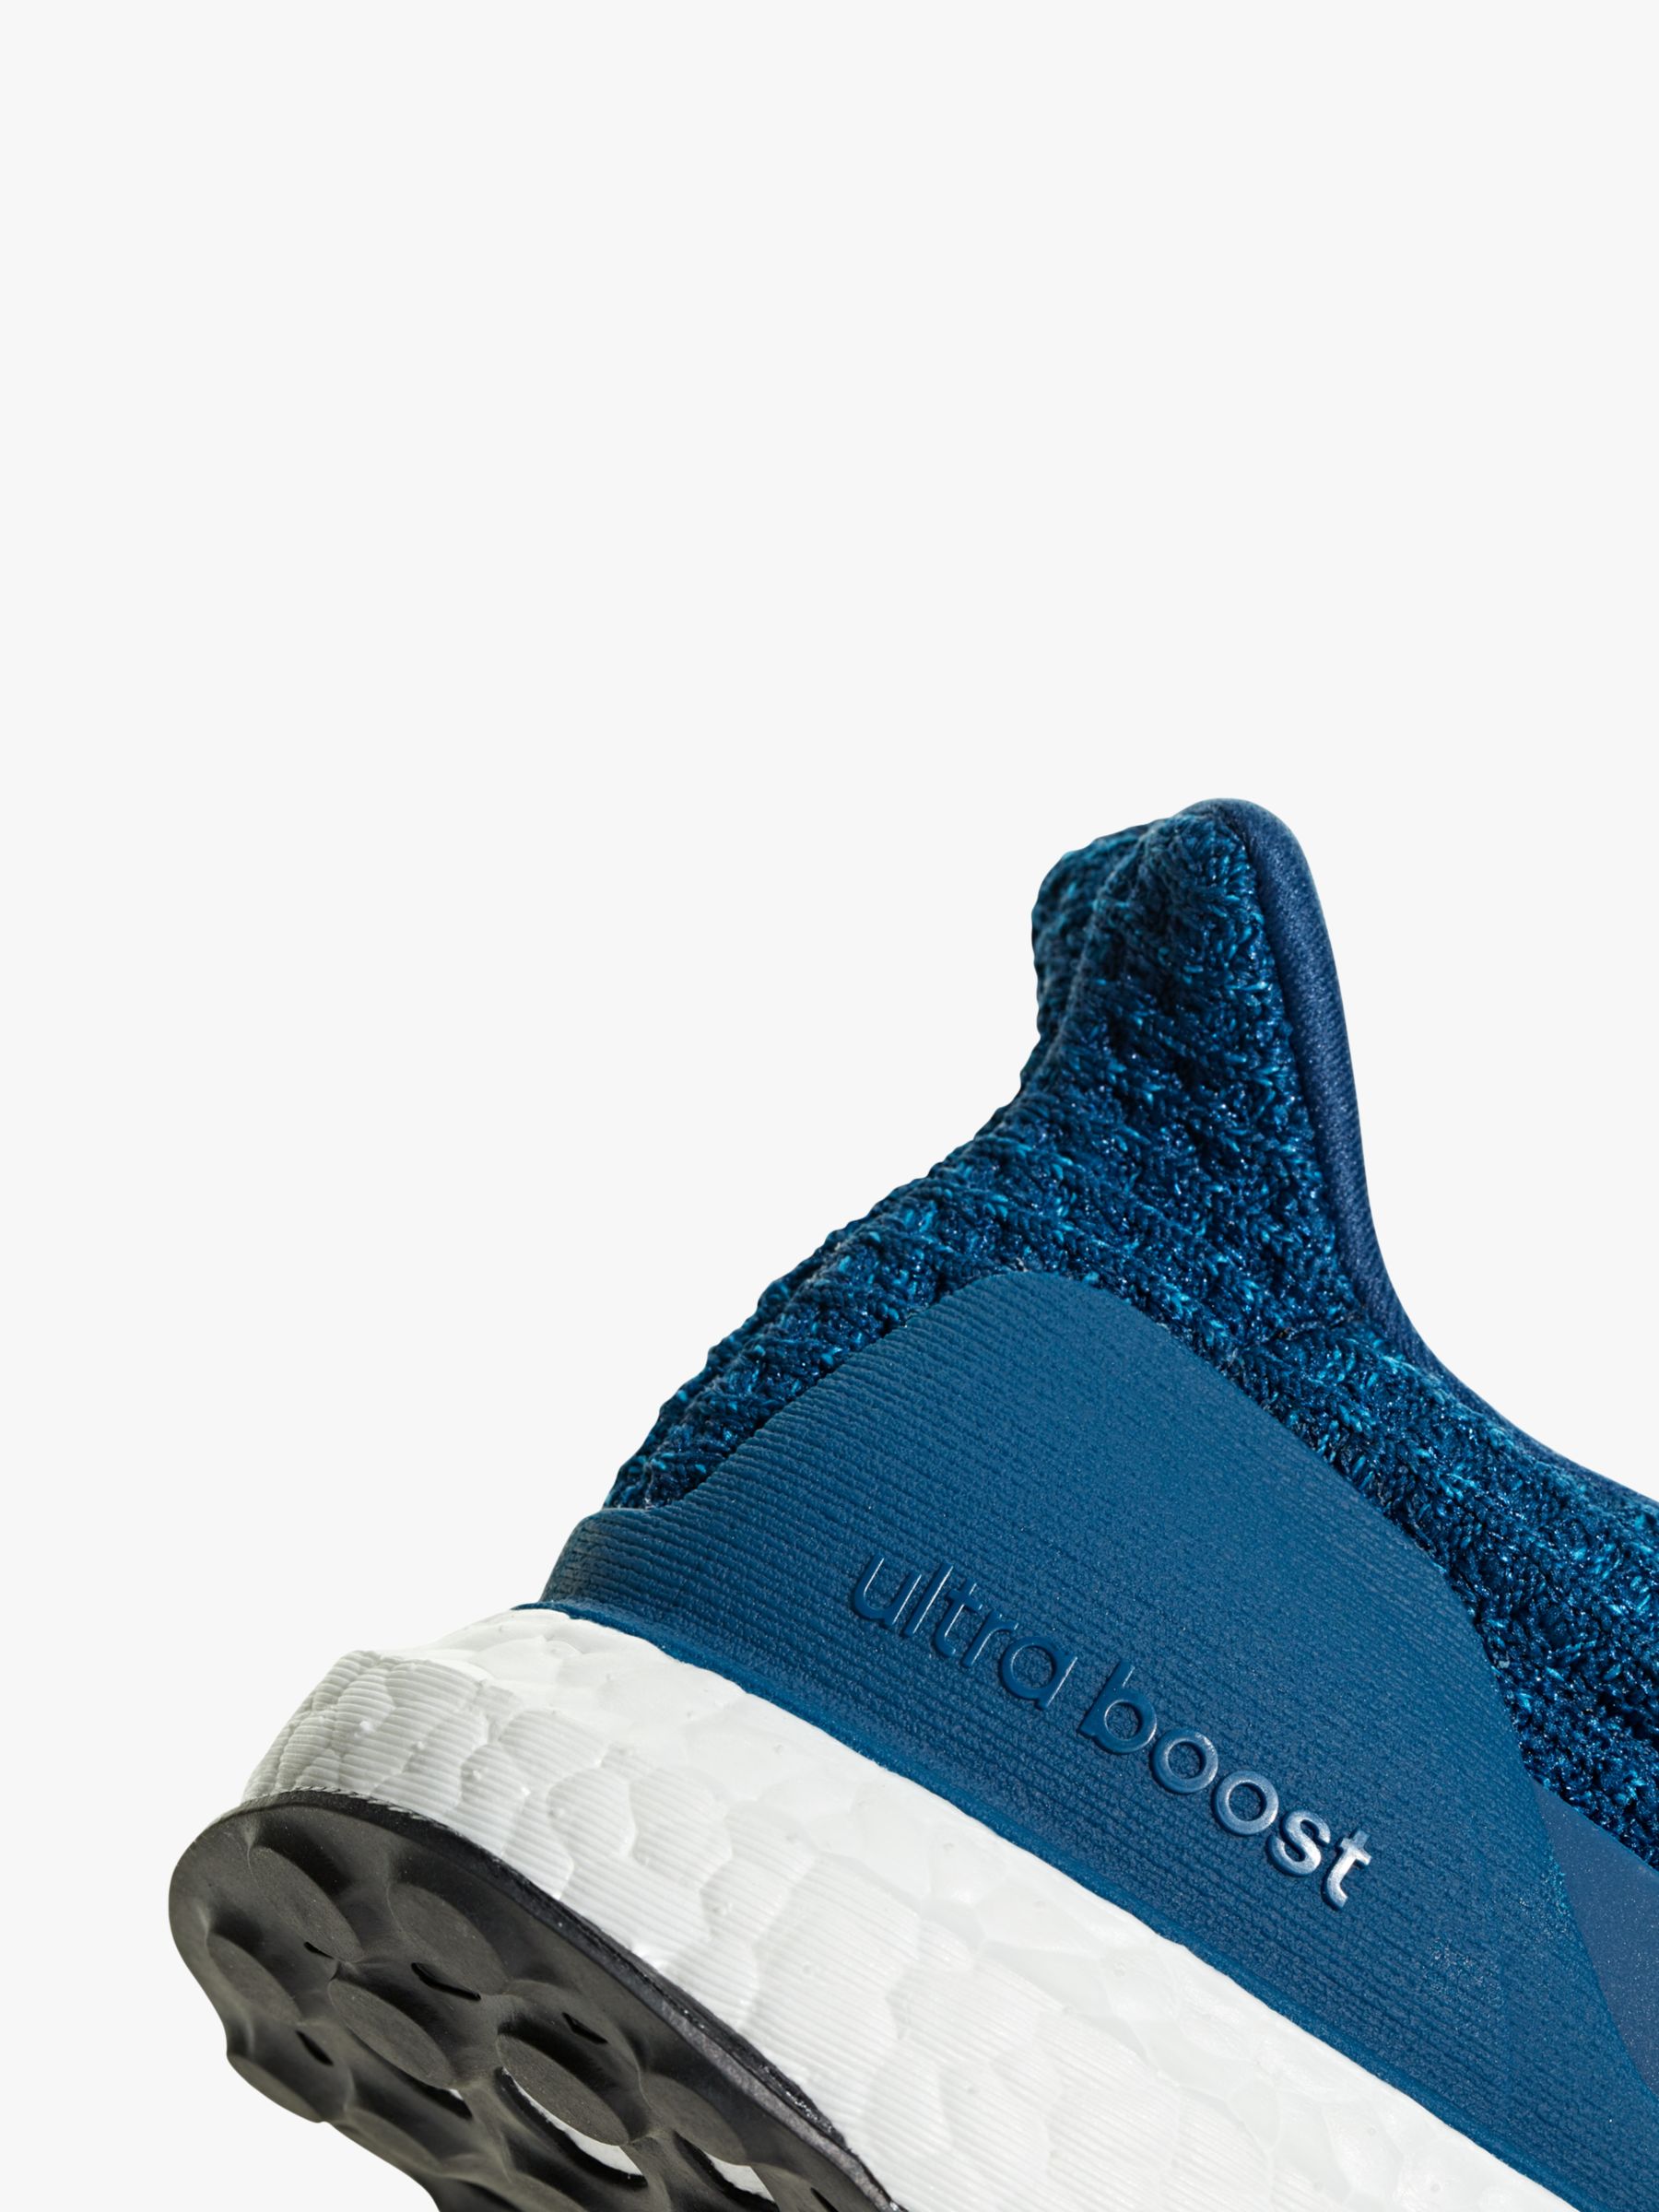 adidas ultraboost running shoes mens